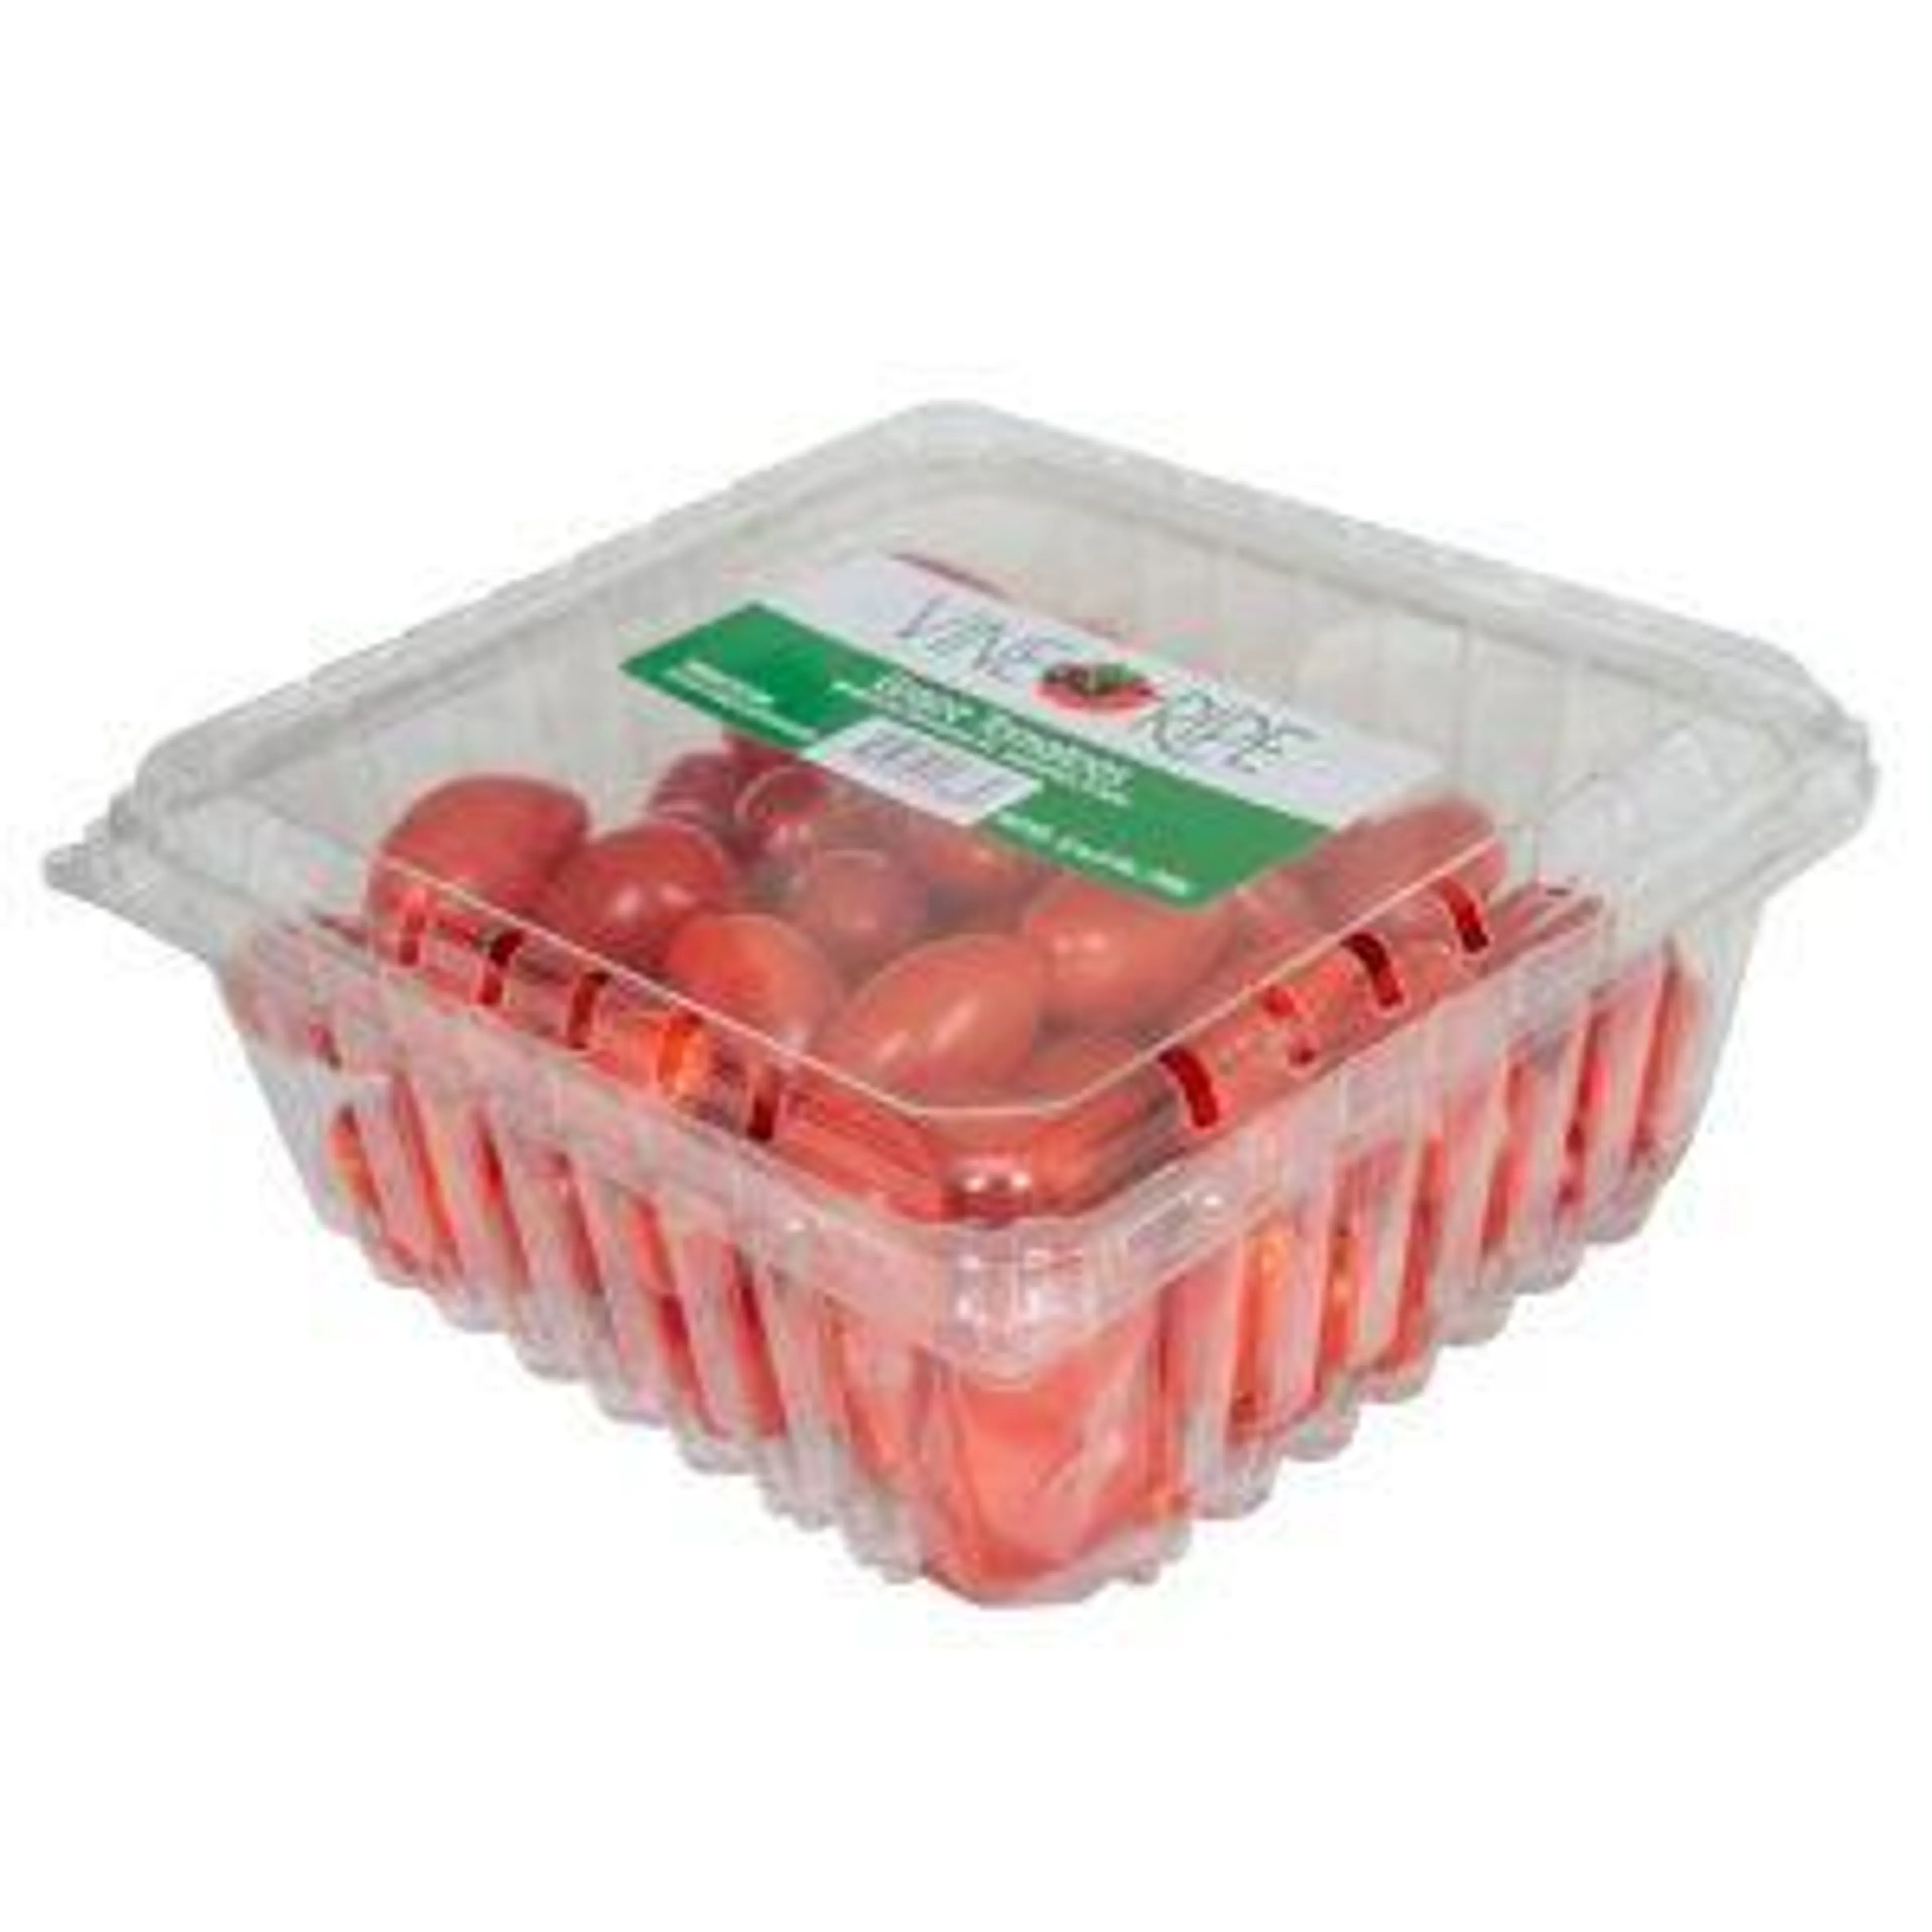 Fresh Grape Tomatoes